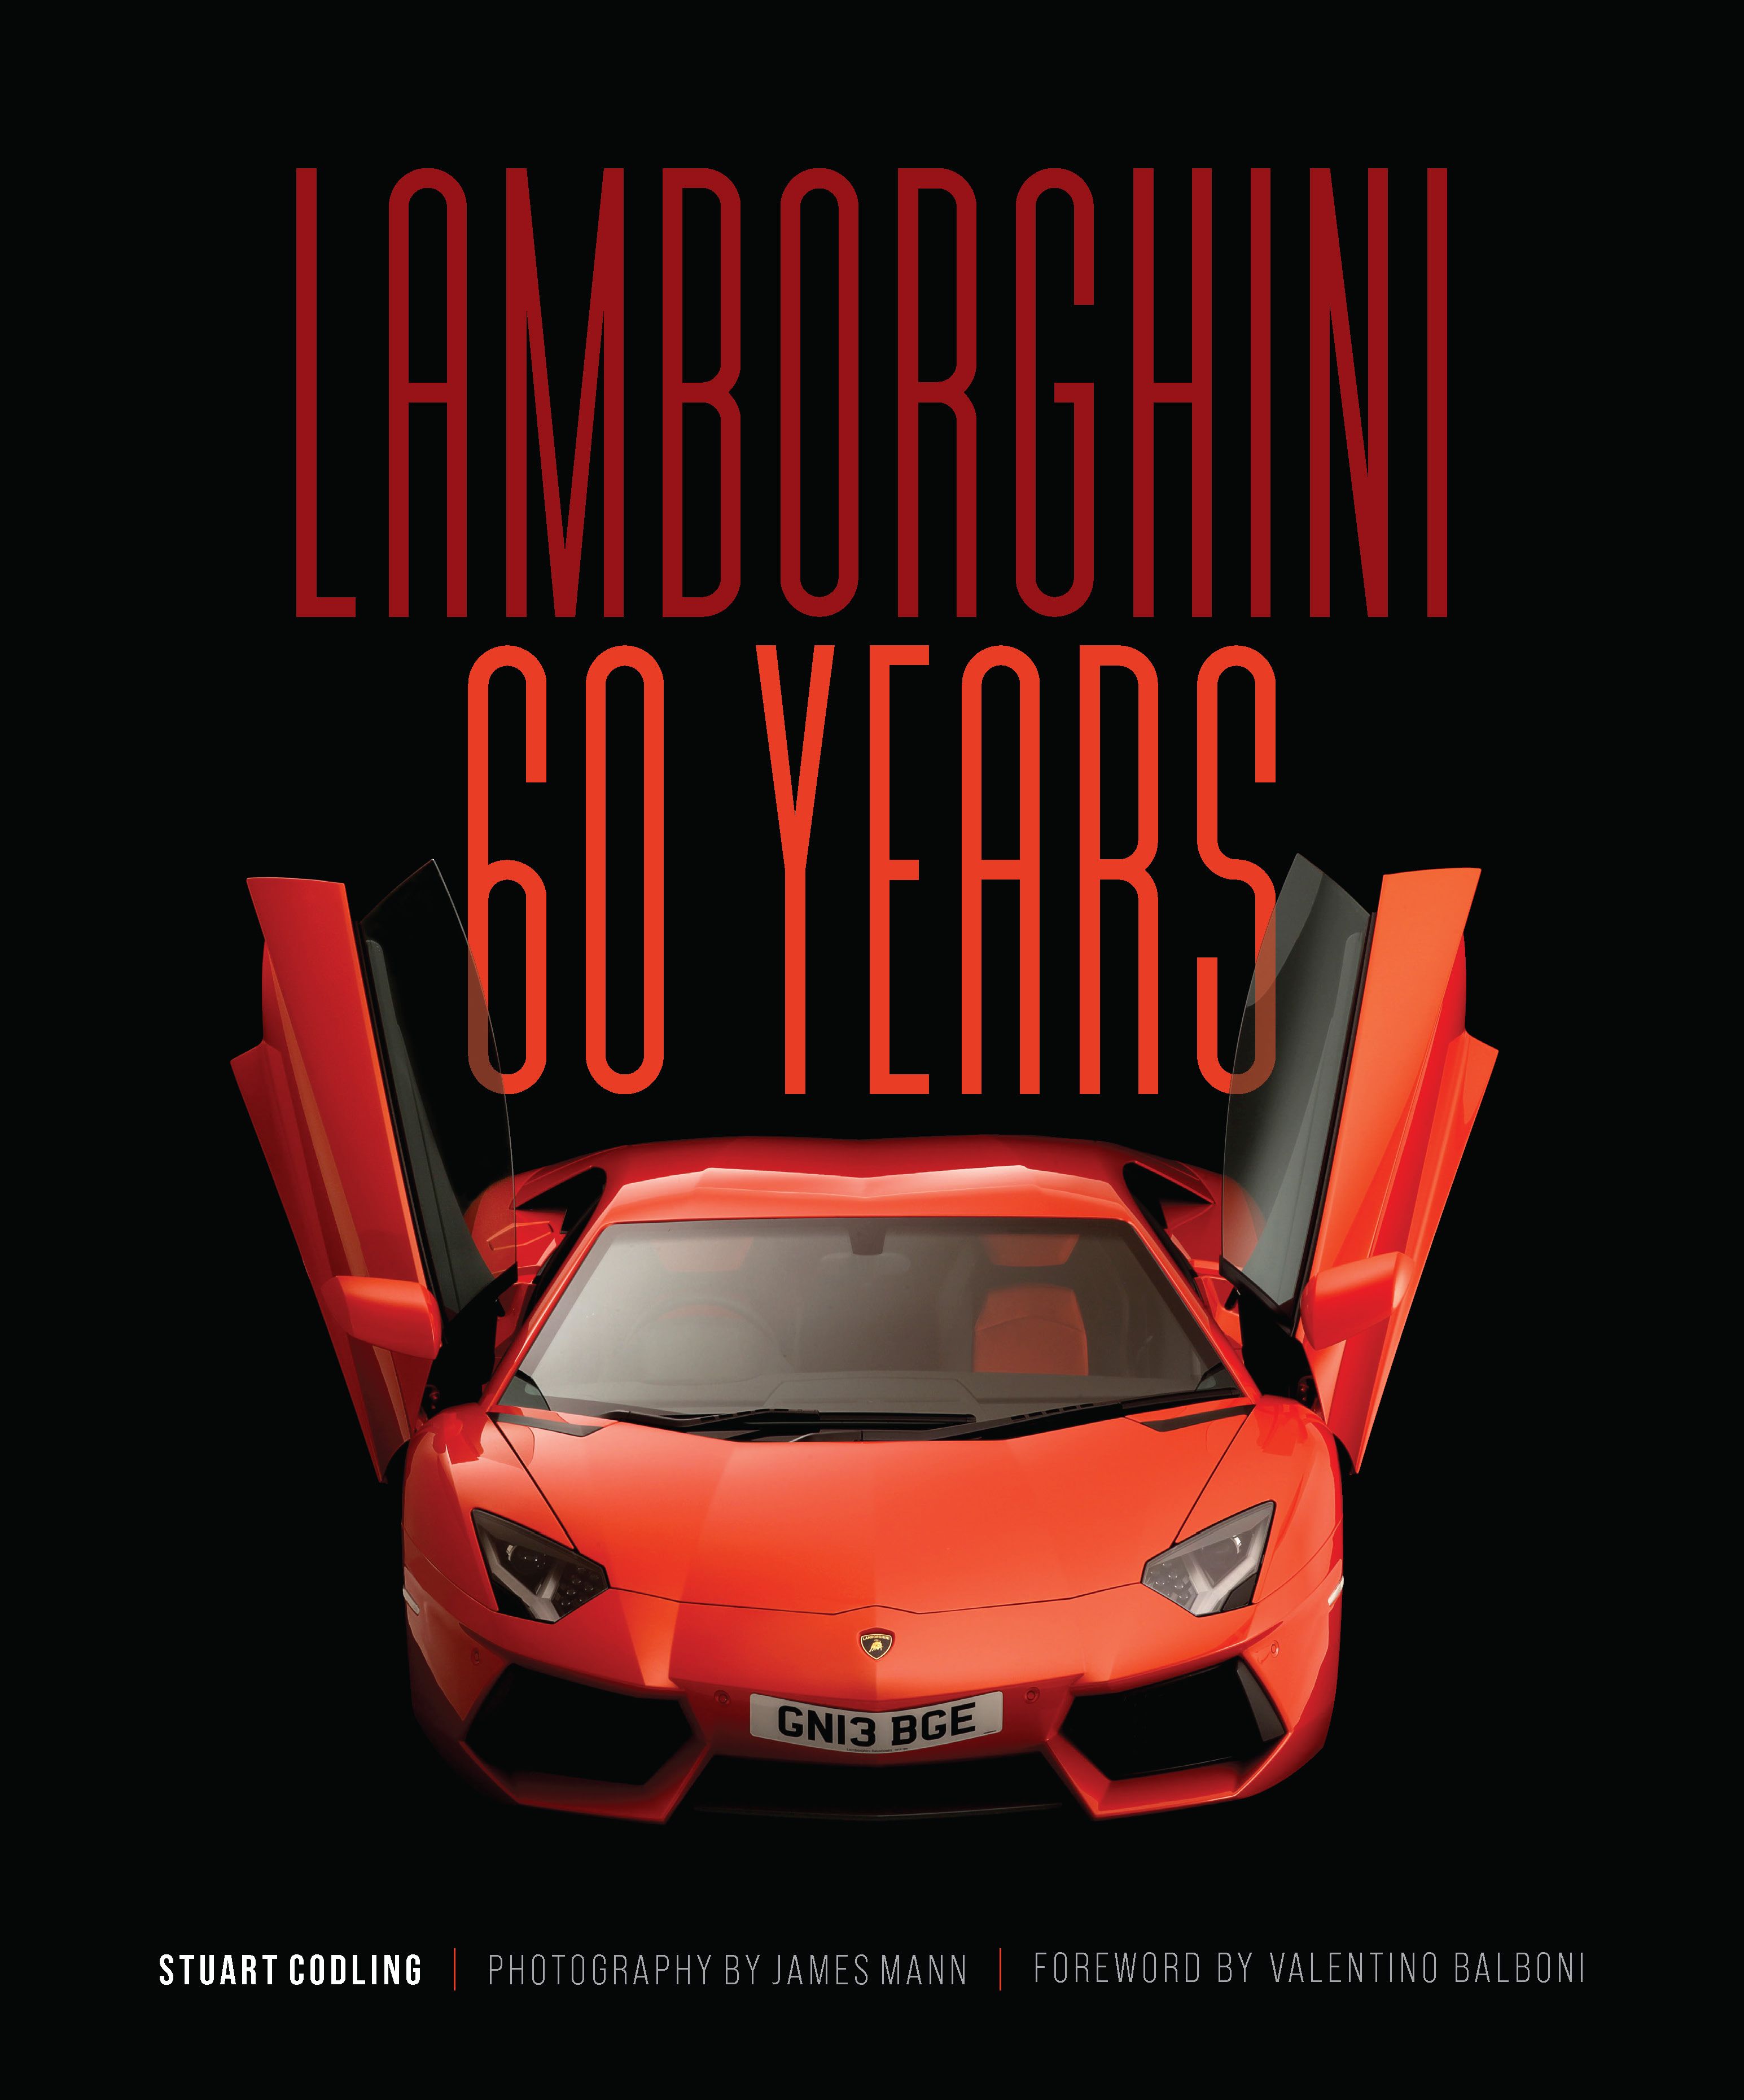 Lamborghini: 60 Years' Tells a Fascinating, Convoluted History